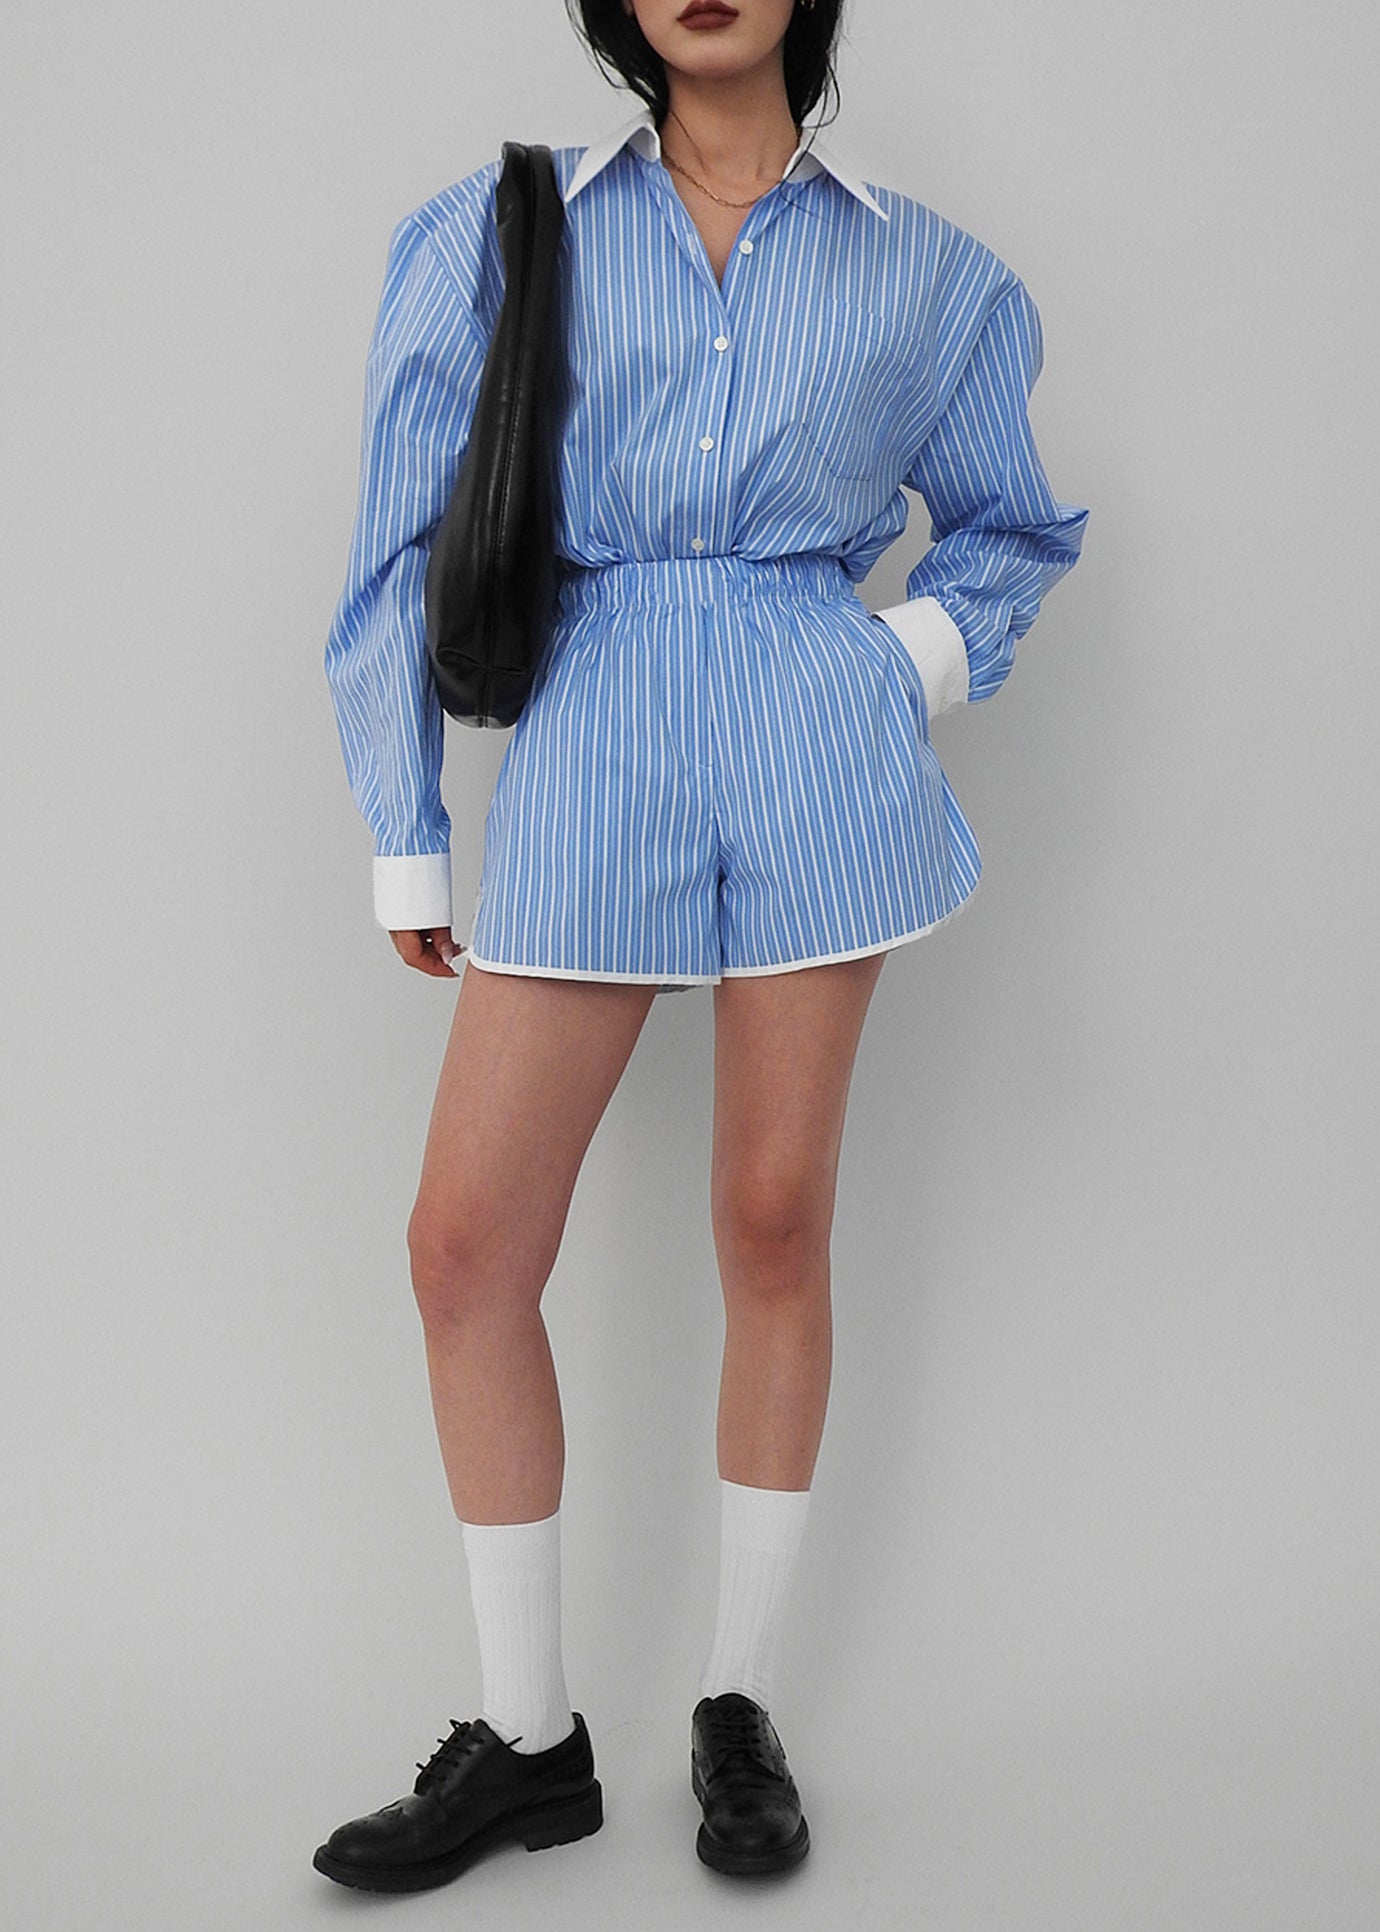 Orla Button Up Shirt - Blue/White Stripe